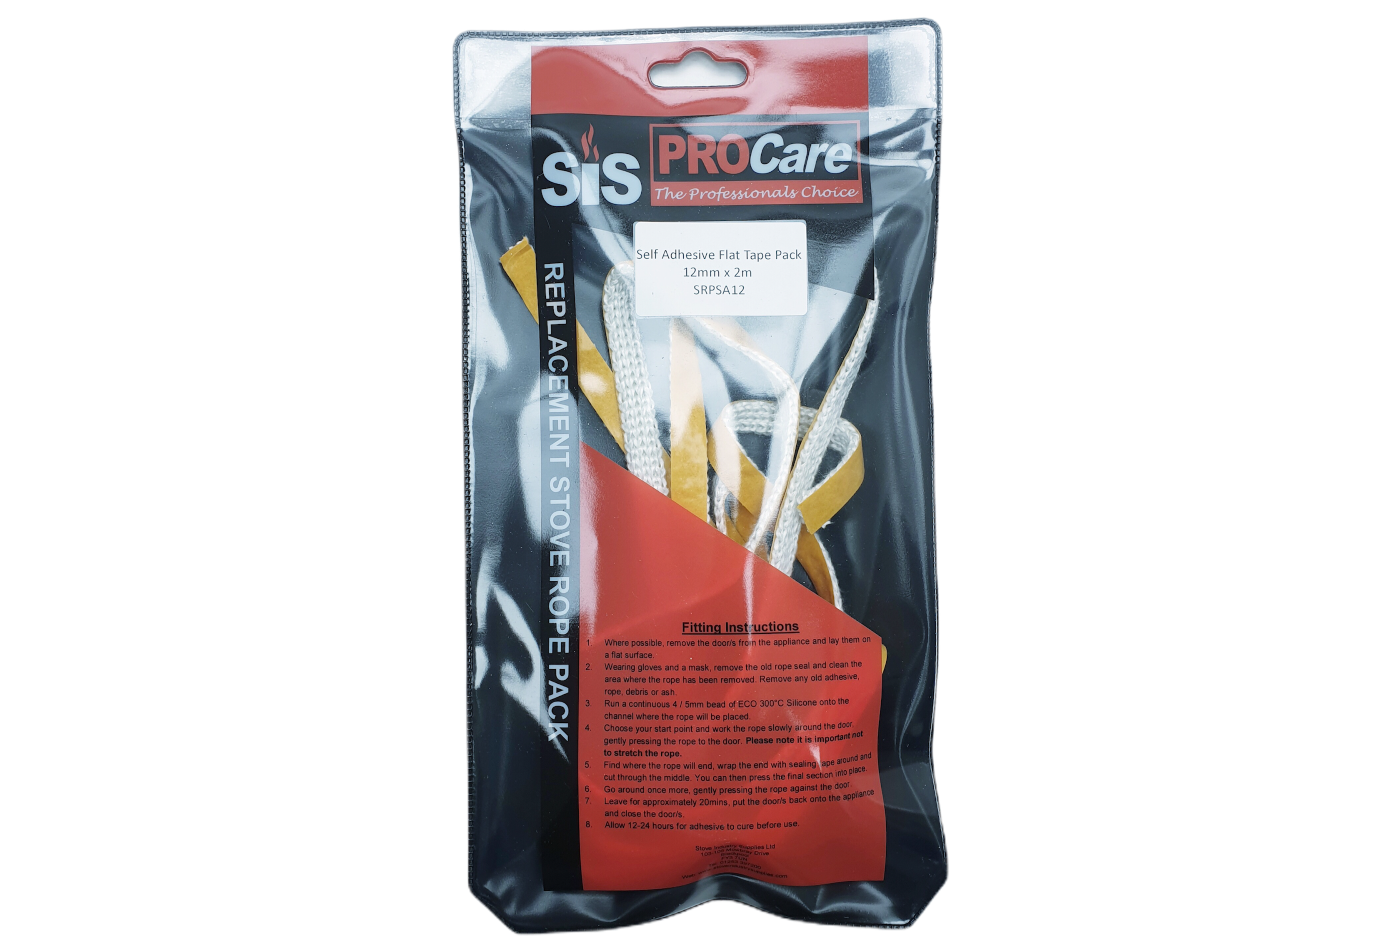 SiS Procare White 12 milimetre x 2 metre Self Adhesive Flat Tape Pack - product code SRPSA12